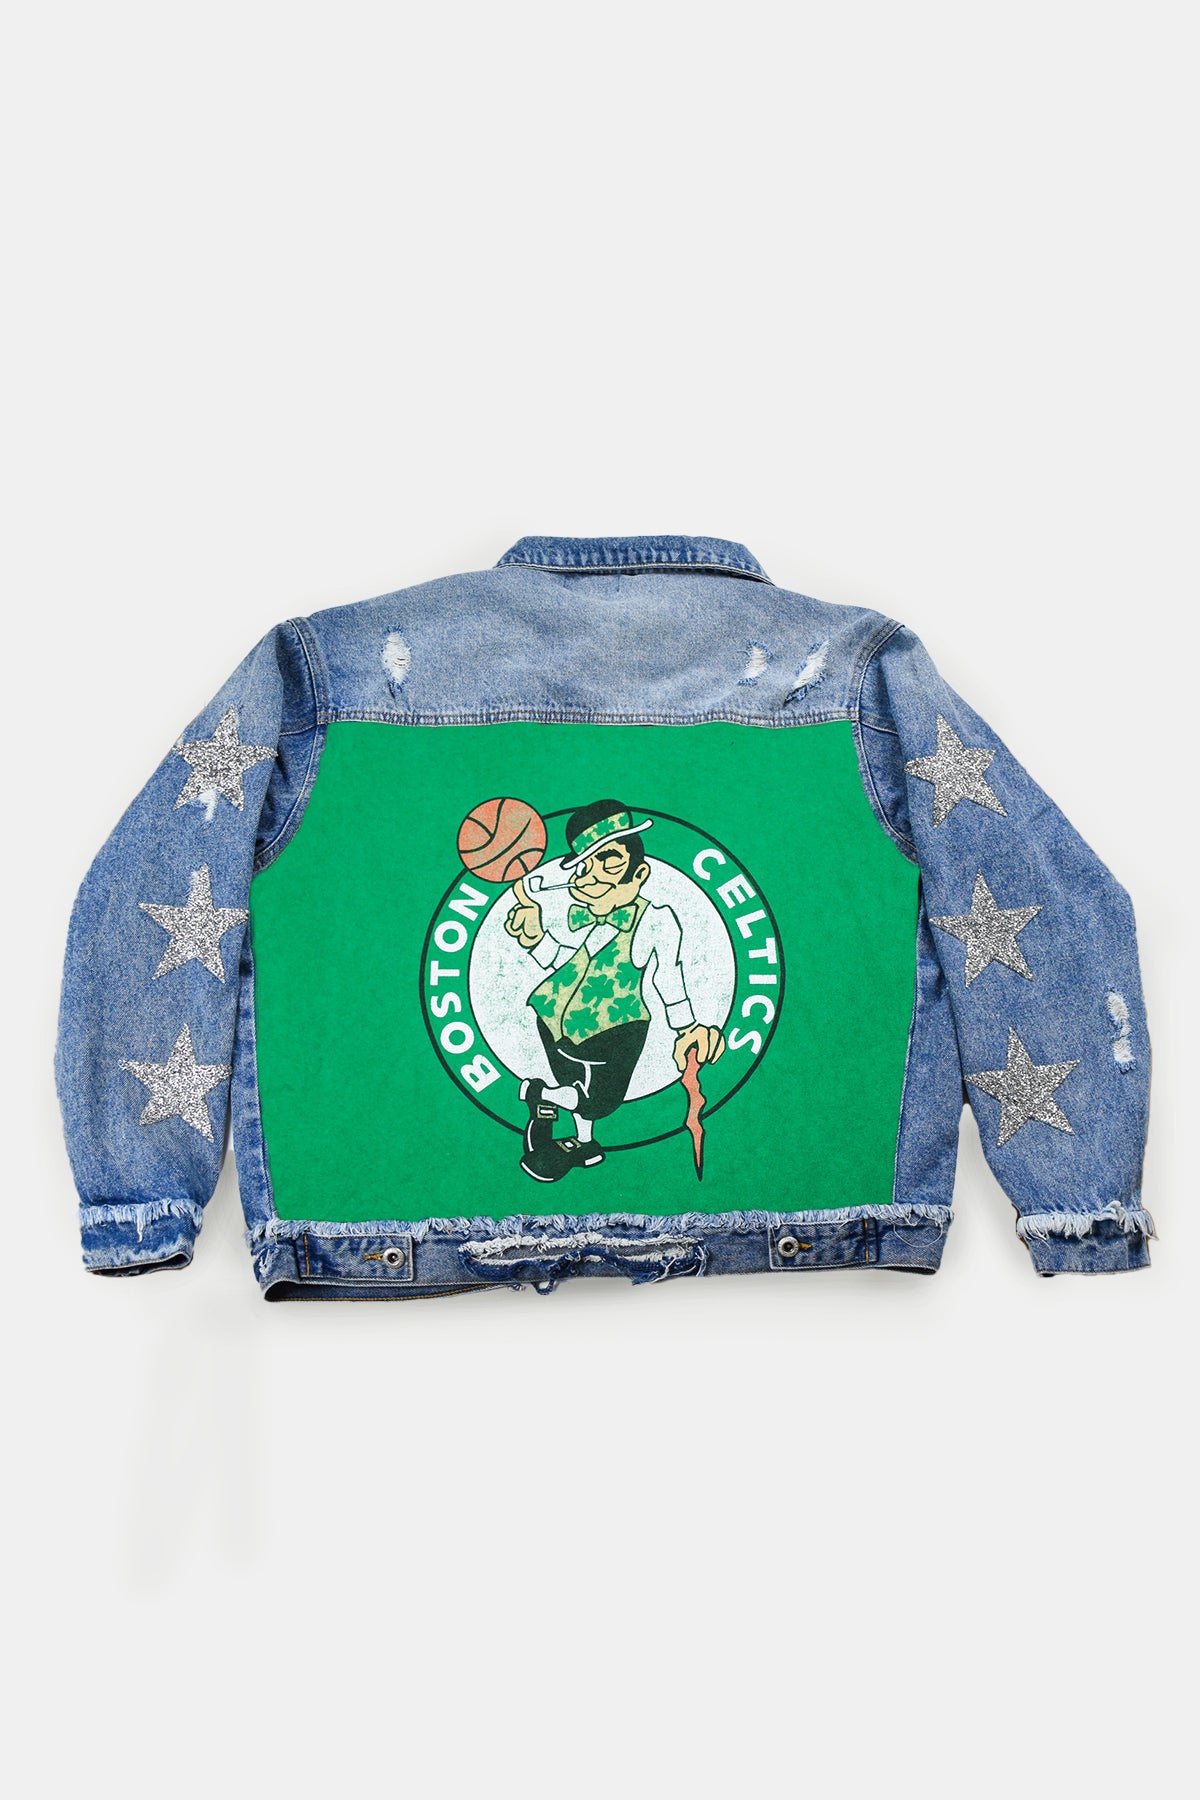 Upcycled Celtics Star Patchwork Jacket